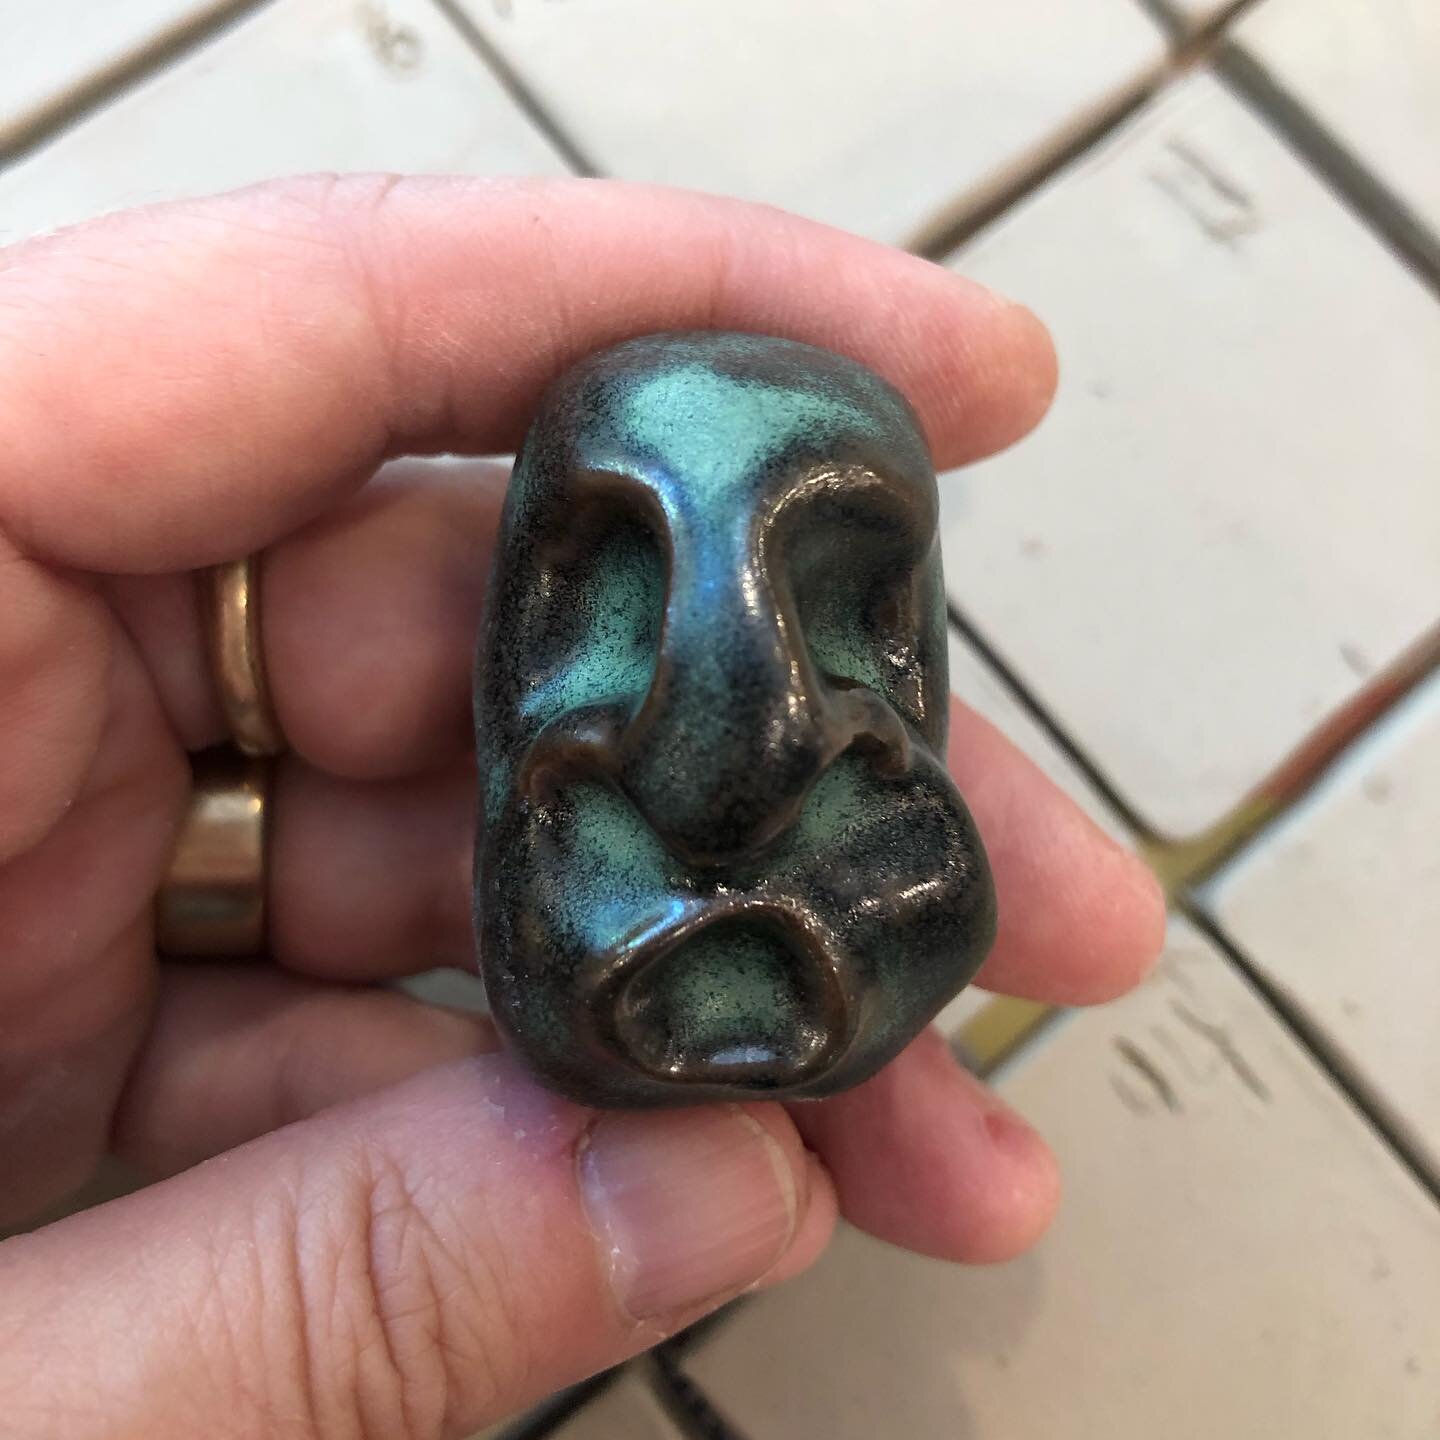 faces for small places!

(thank you @davezackin, word wizard, for sharing your genius!)

#brooklynartist #ceramics #ceramicsculpture #heads #ceramicheads #ceramicfaces #faces #pocketart #brooklynceramics  #artistsoninstagram #keramik #keramika #conte